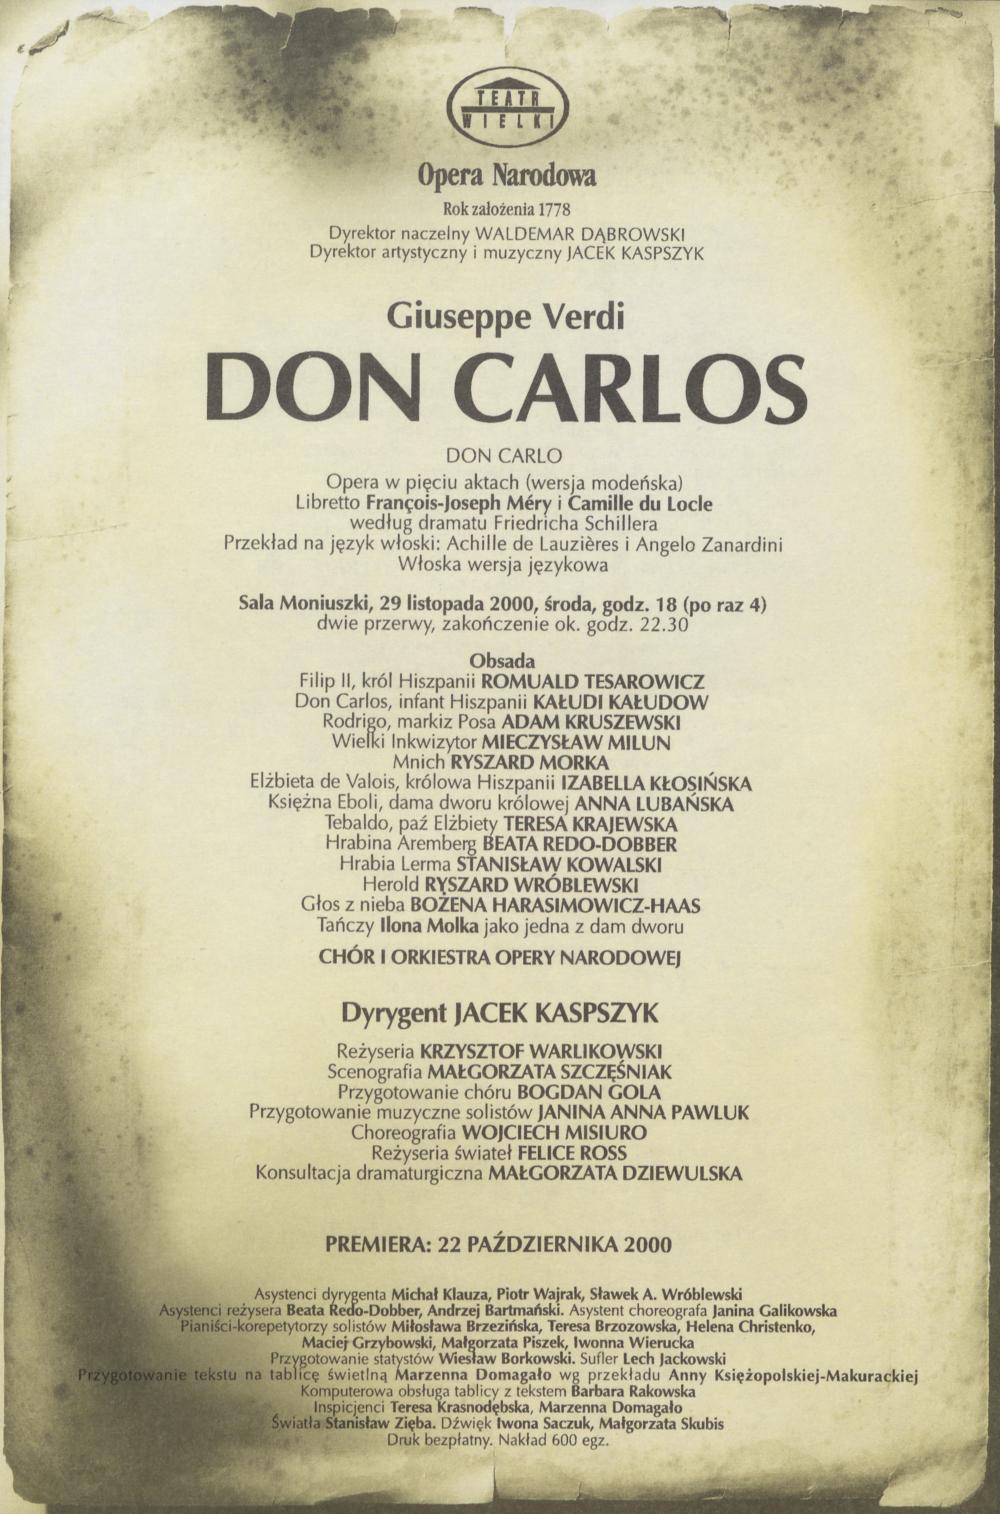 Wkładka obsadowa „Don Carlos” Giuseppe Verdi 29-11-2000